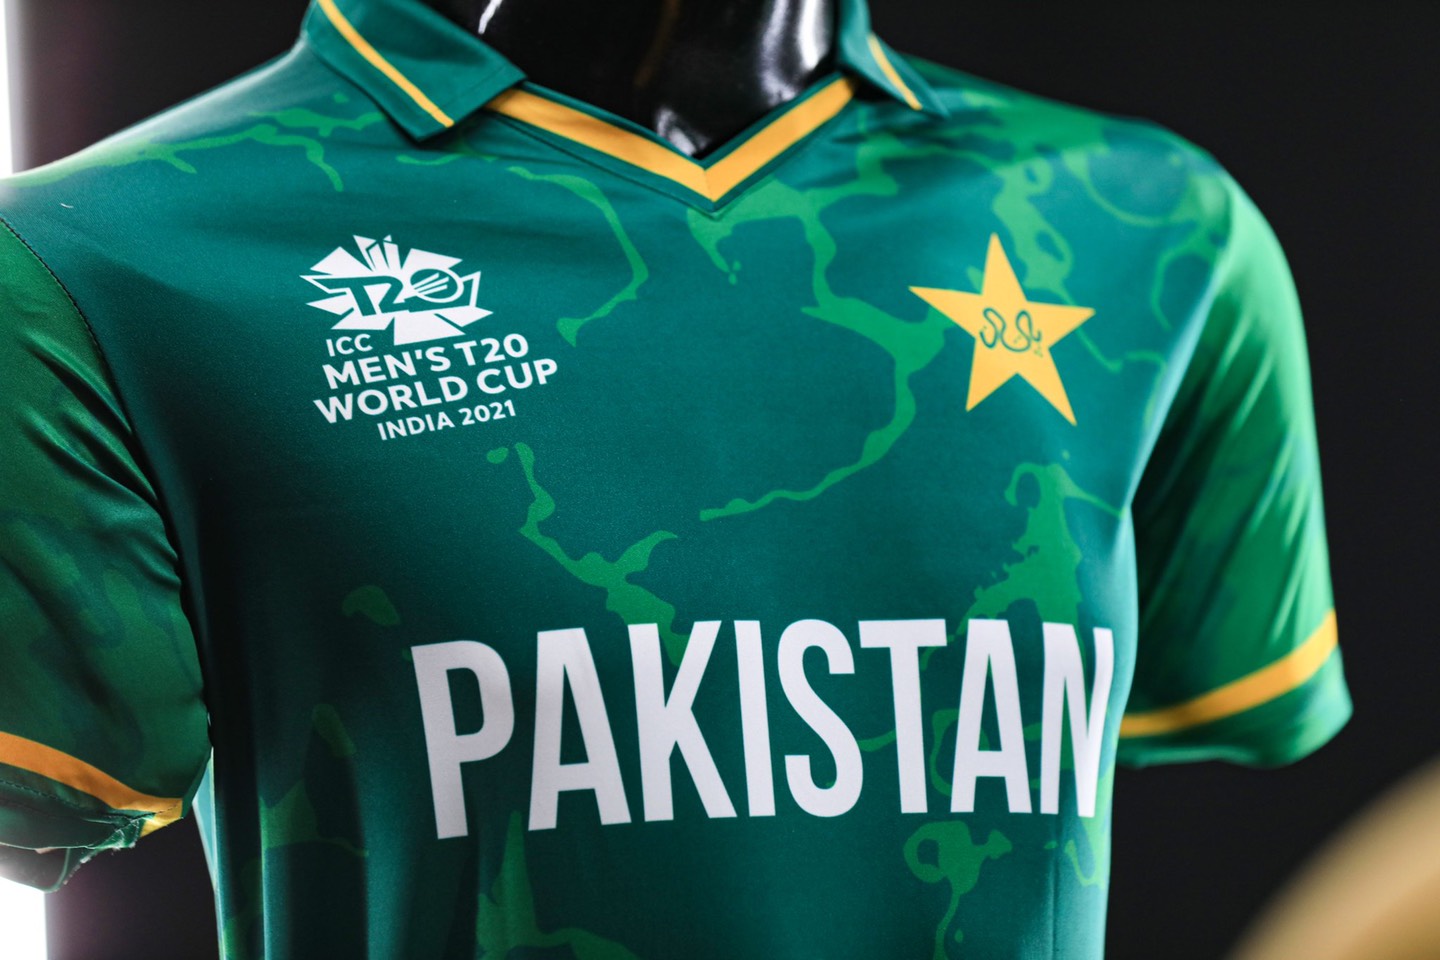 ICC Pakistan Cricket T20 World Cup 2021 T-Shirt Jersey 2021 Long & Short Sleeves 